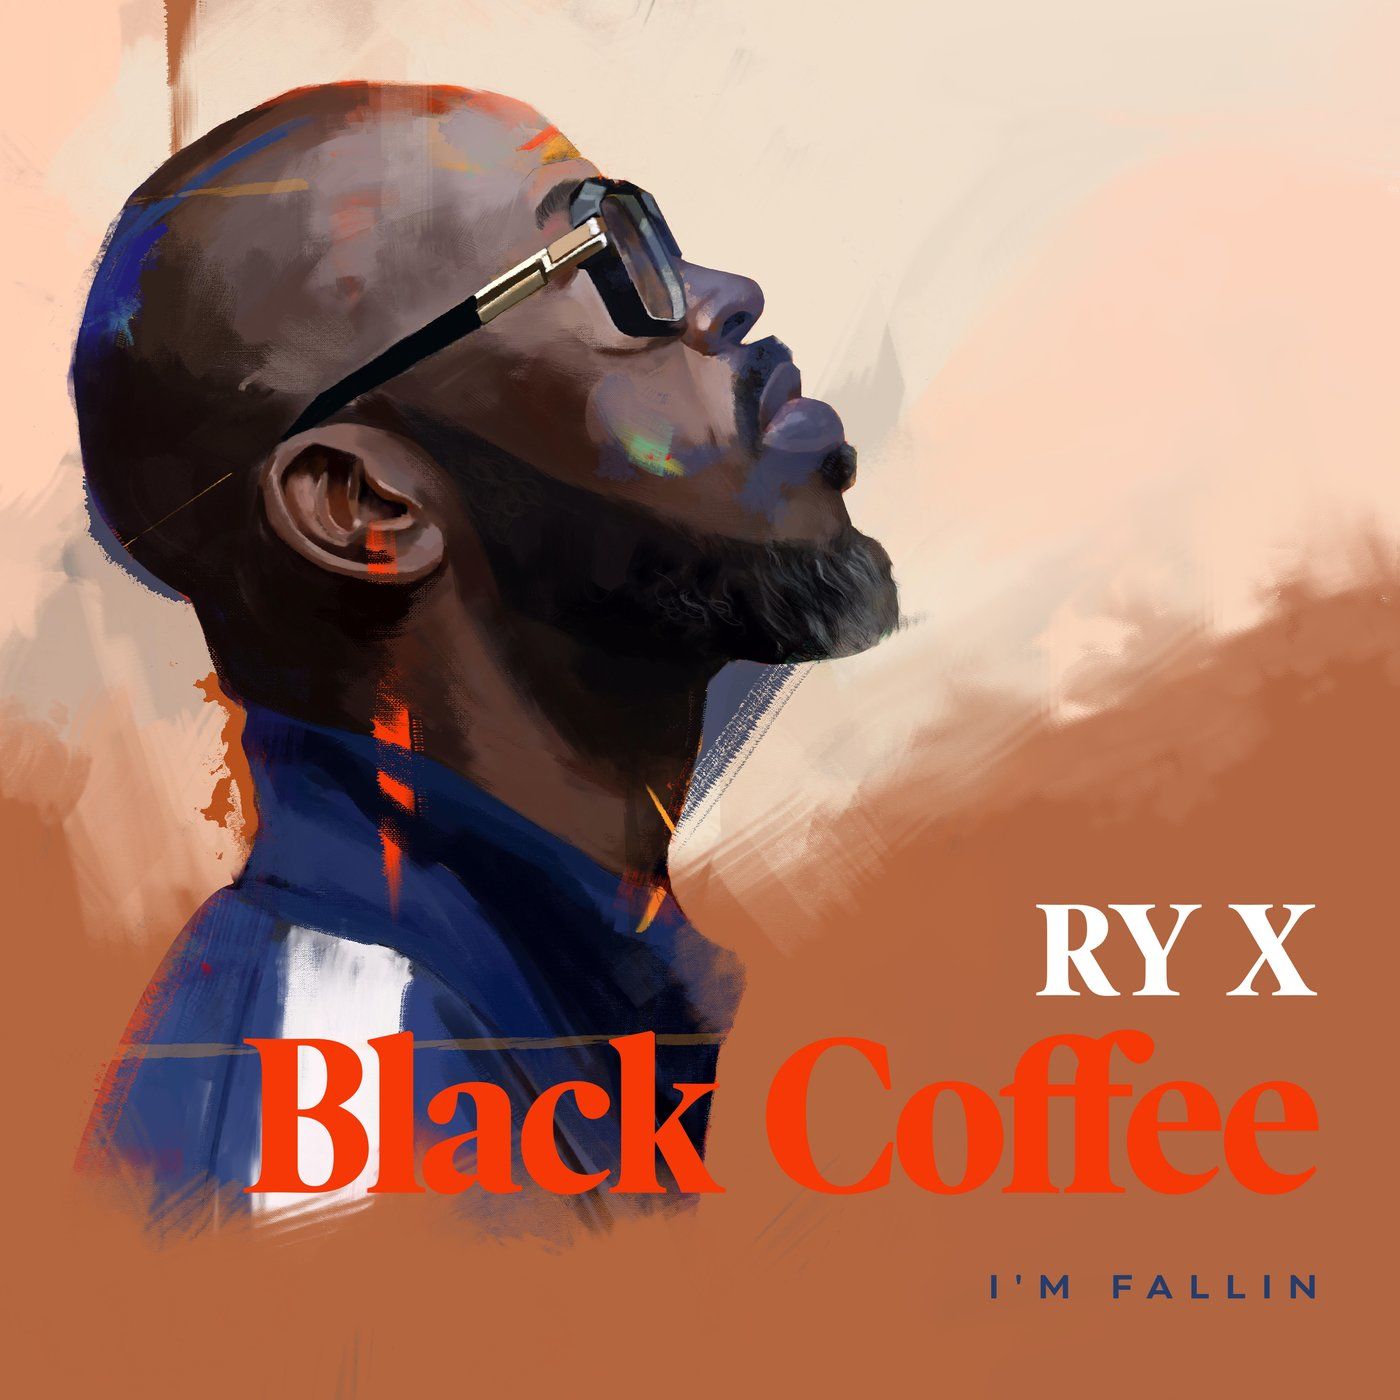 Black Coffee feat. RY X - I'm Fallin' (Original Mix)